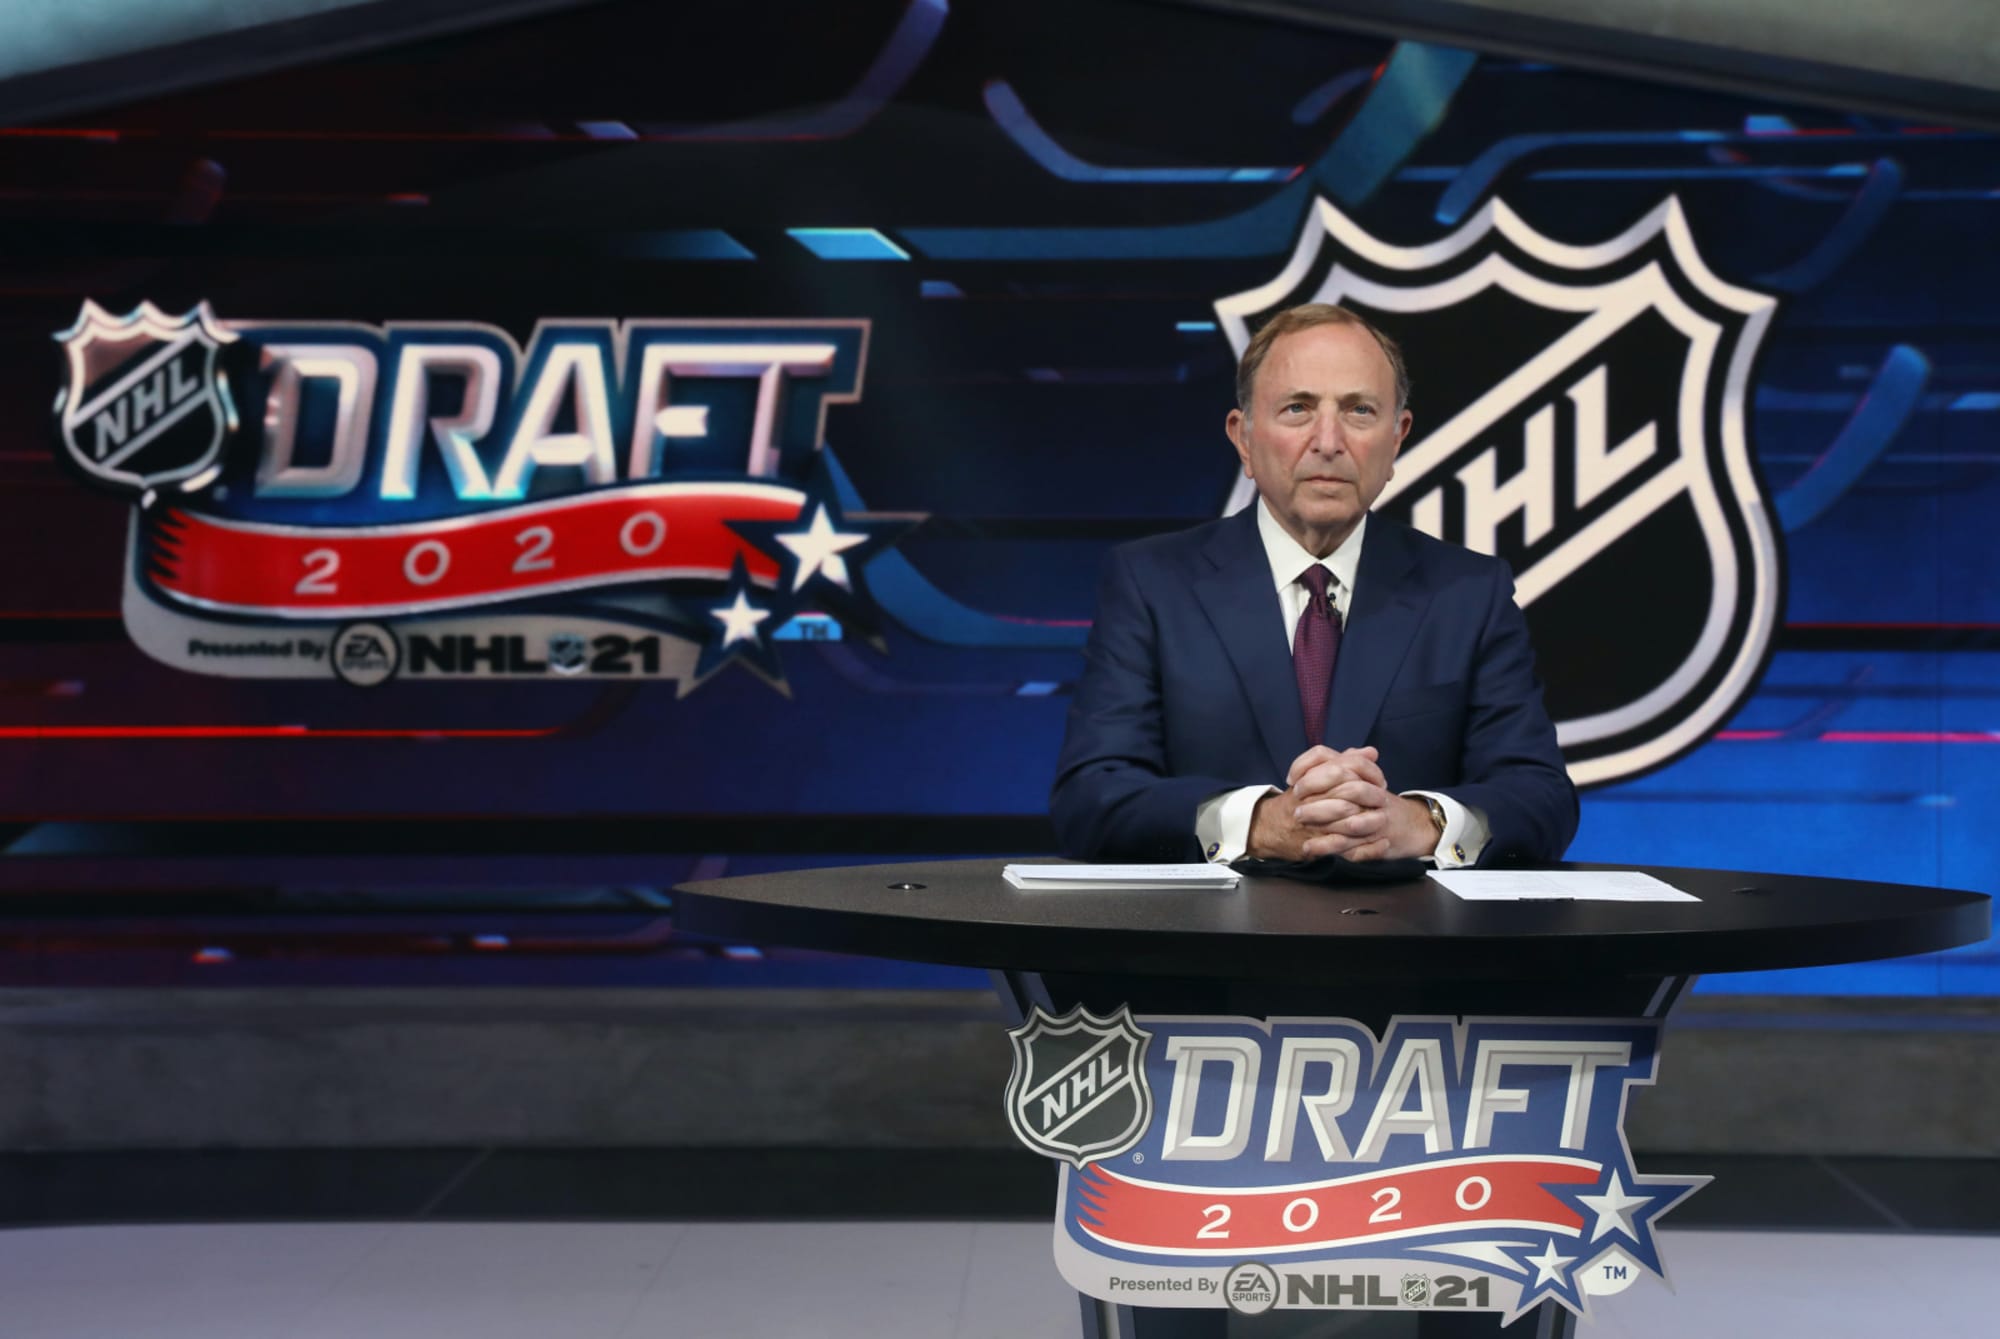 NHL Mock Draft 2017: Full first round